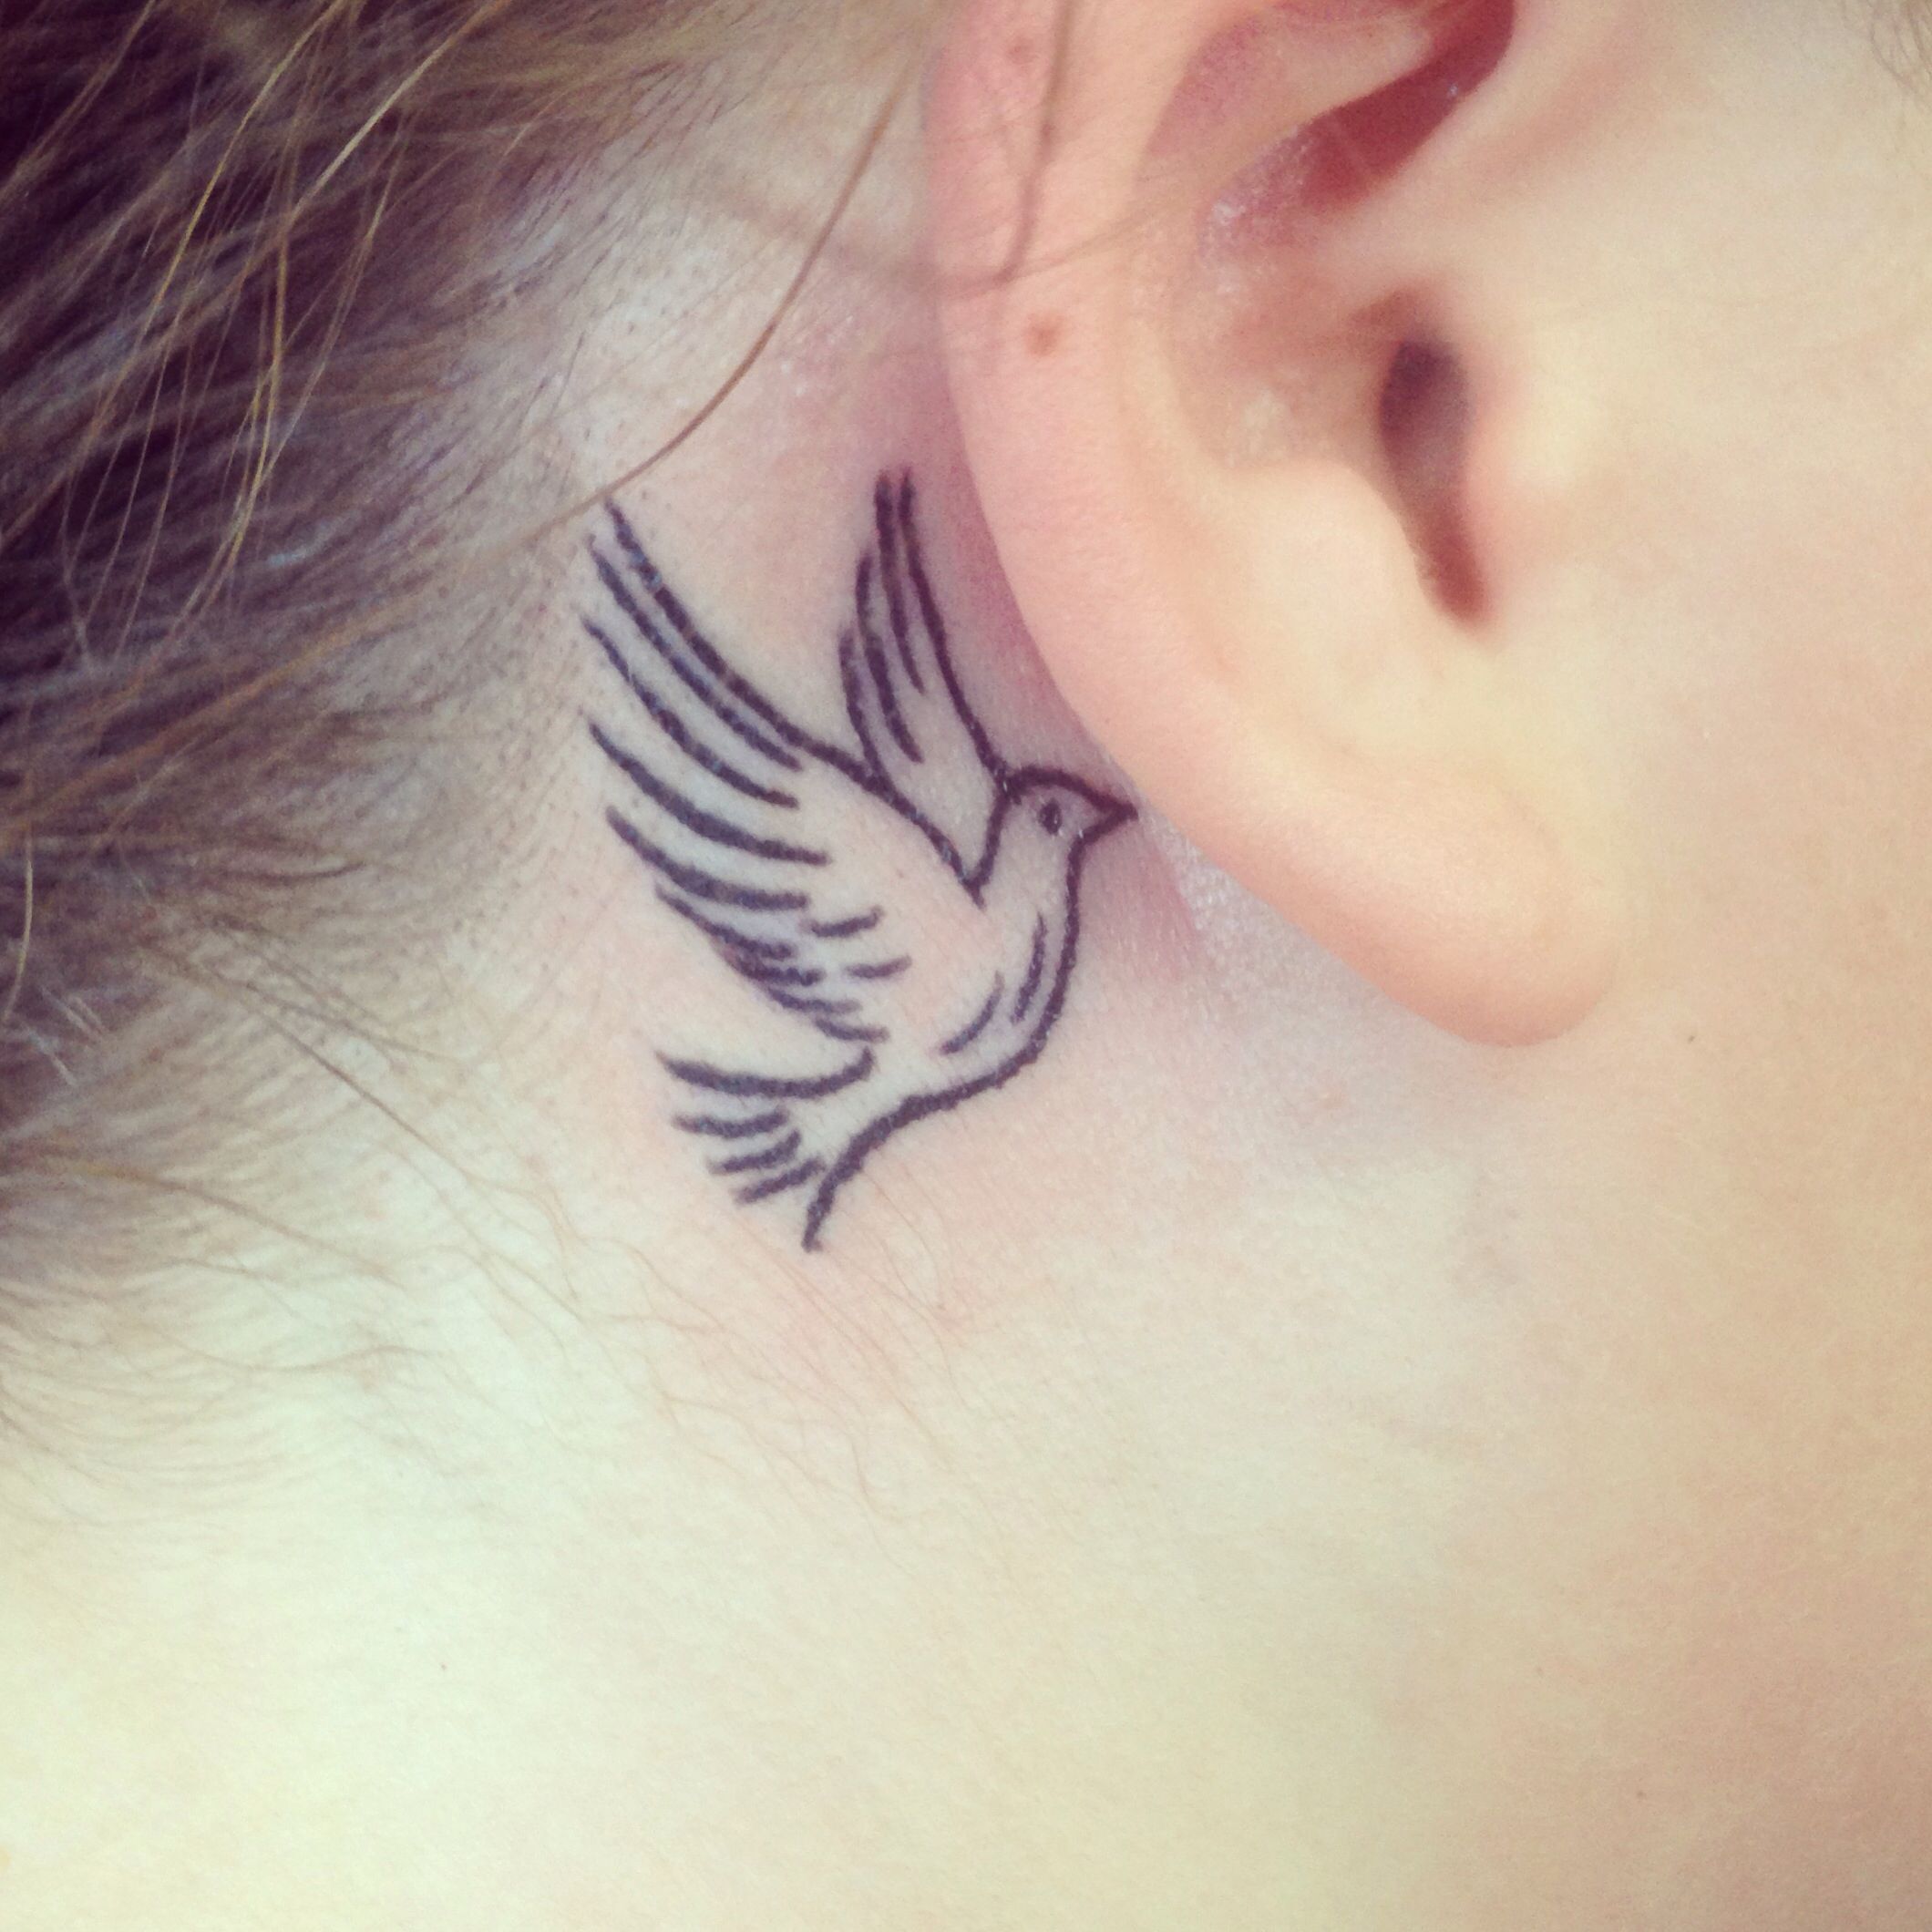 Dove Tattoo Behind Ear